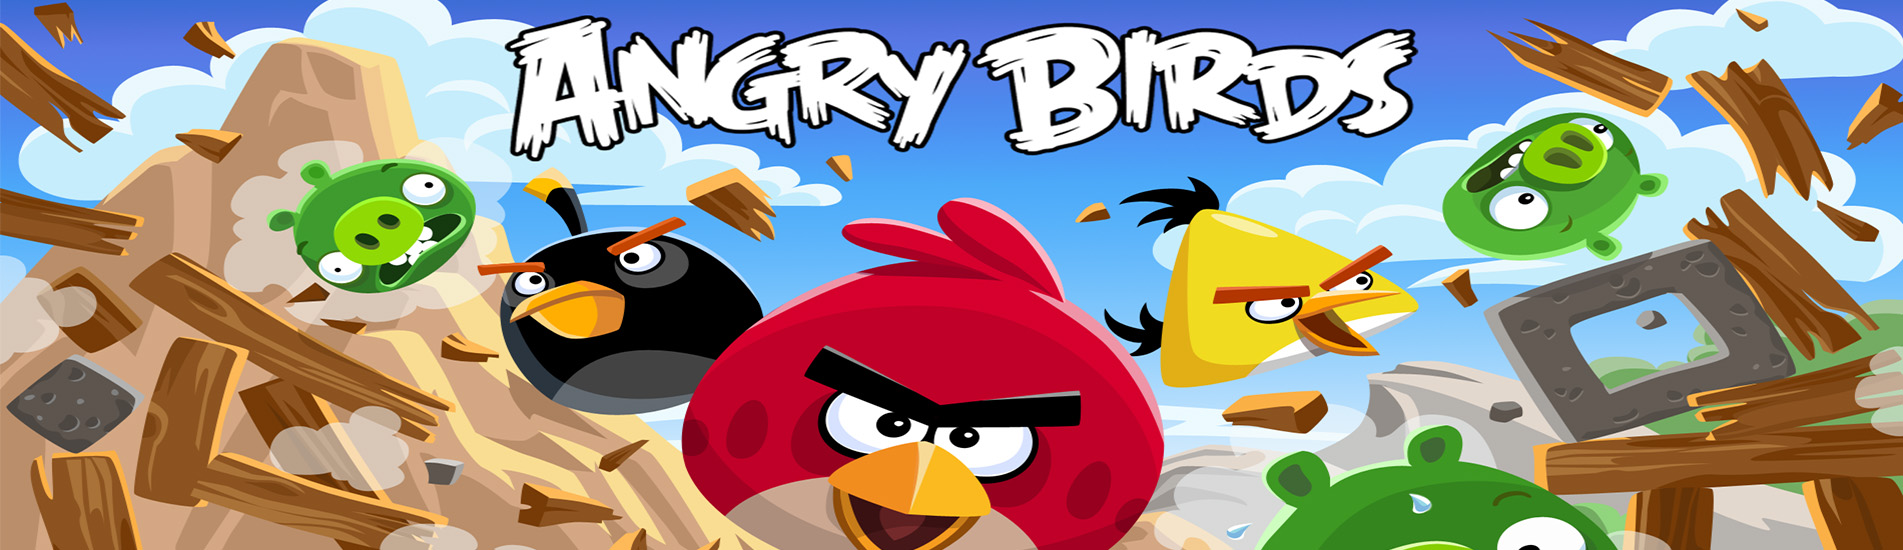 Premier slide angry birds simple